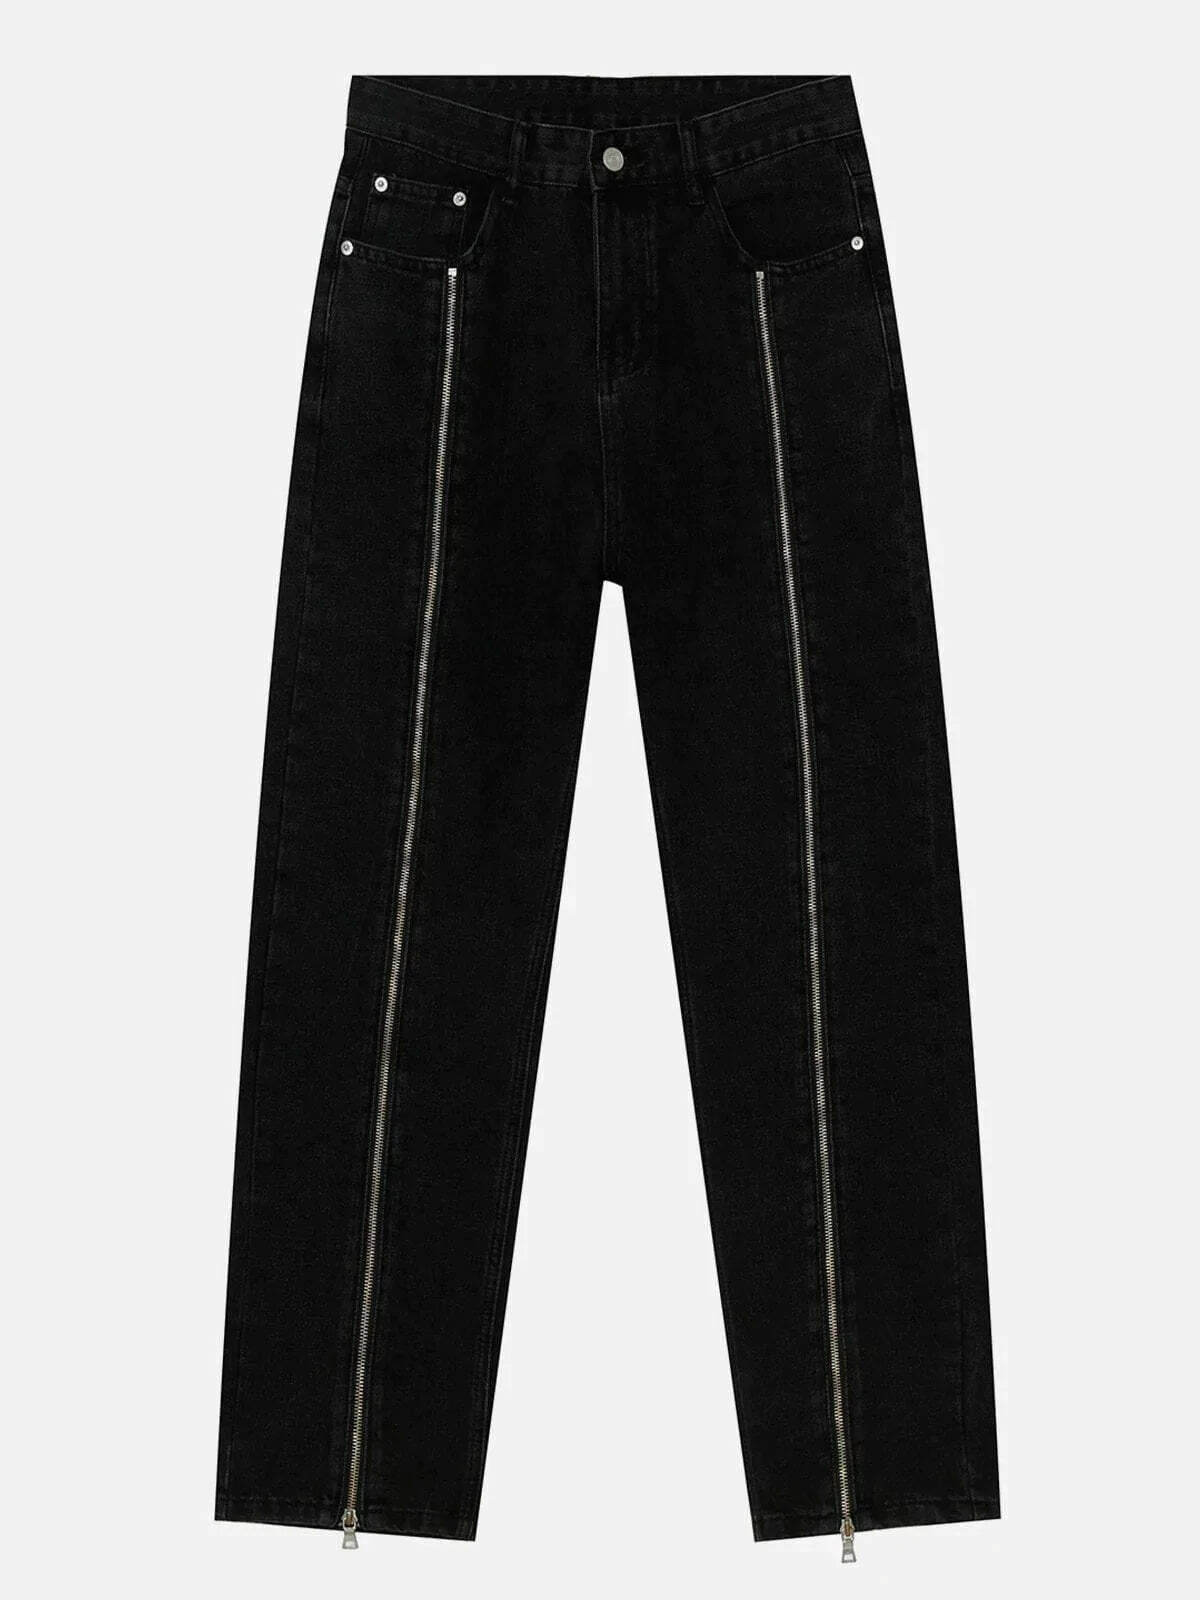 retro zippered jeans edgy & sleek streetwear 6525